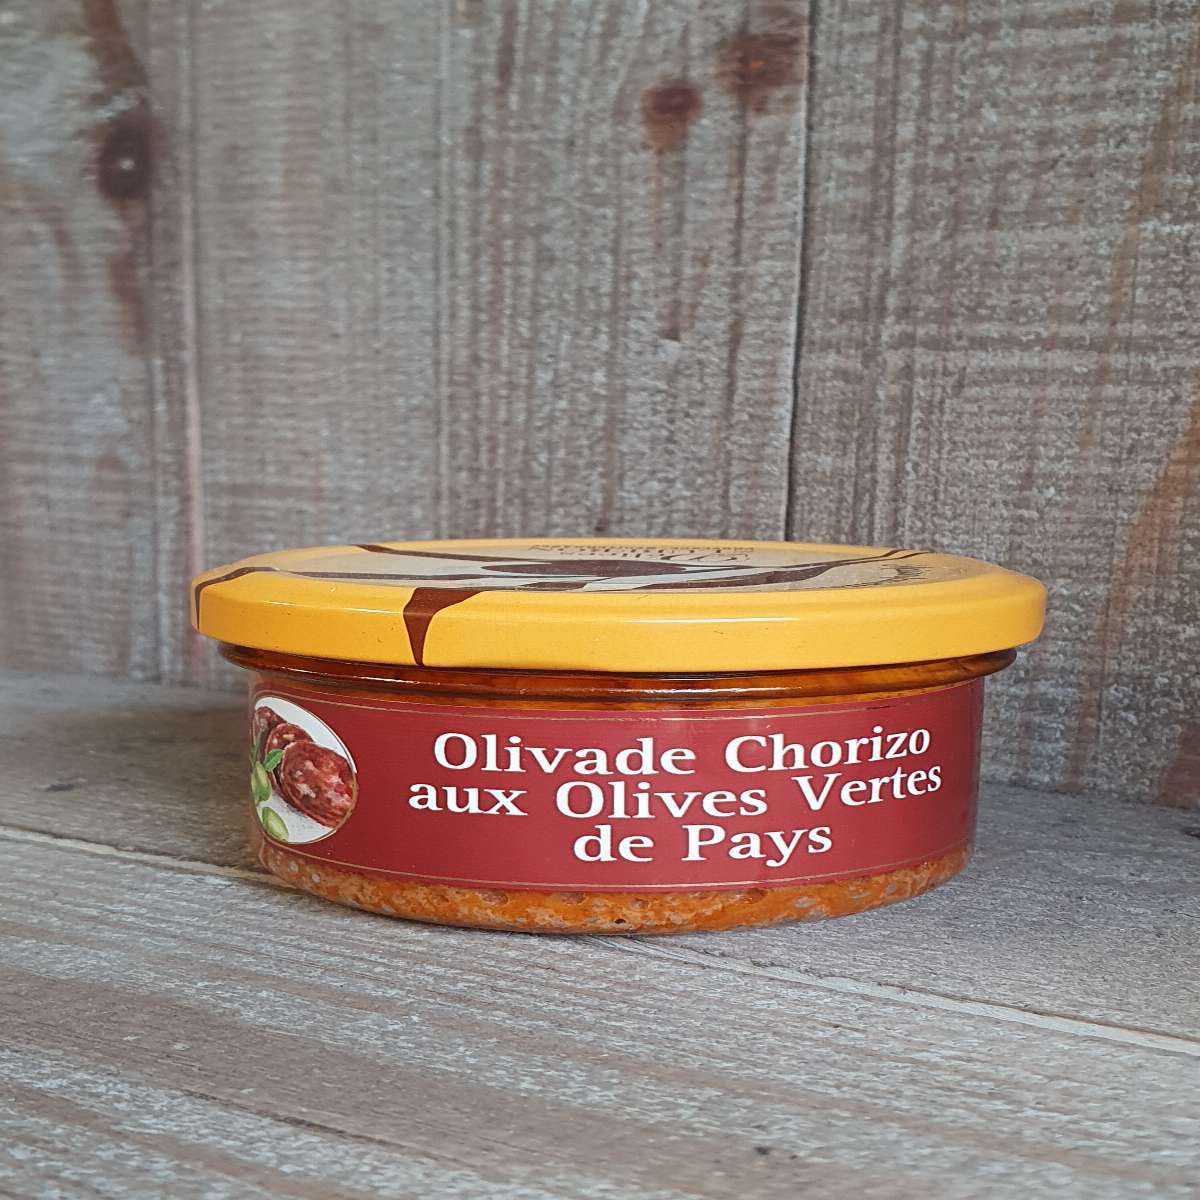 Olivade chorizo aux olives vertes de pays.